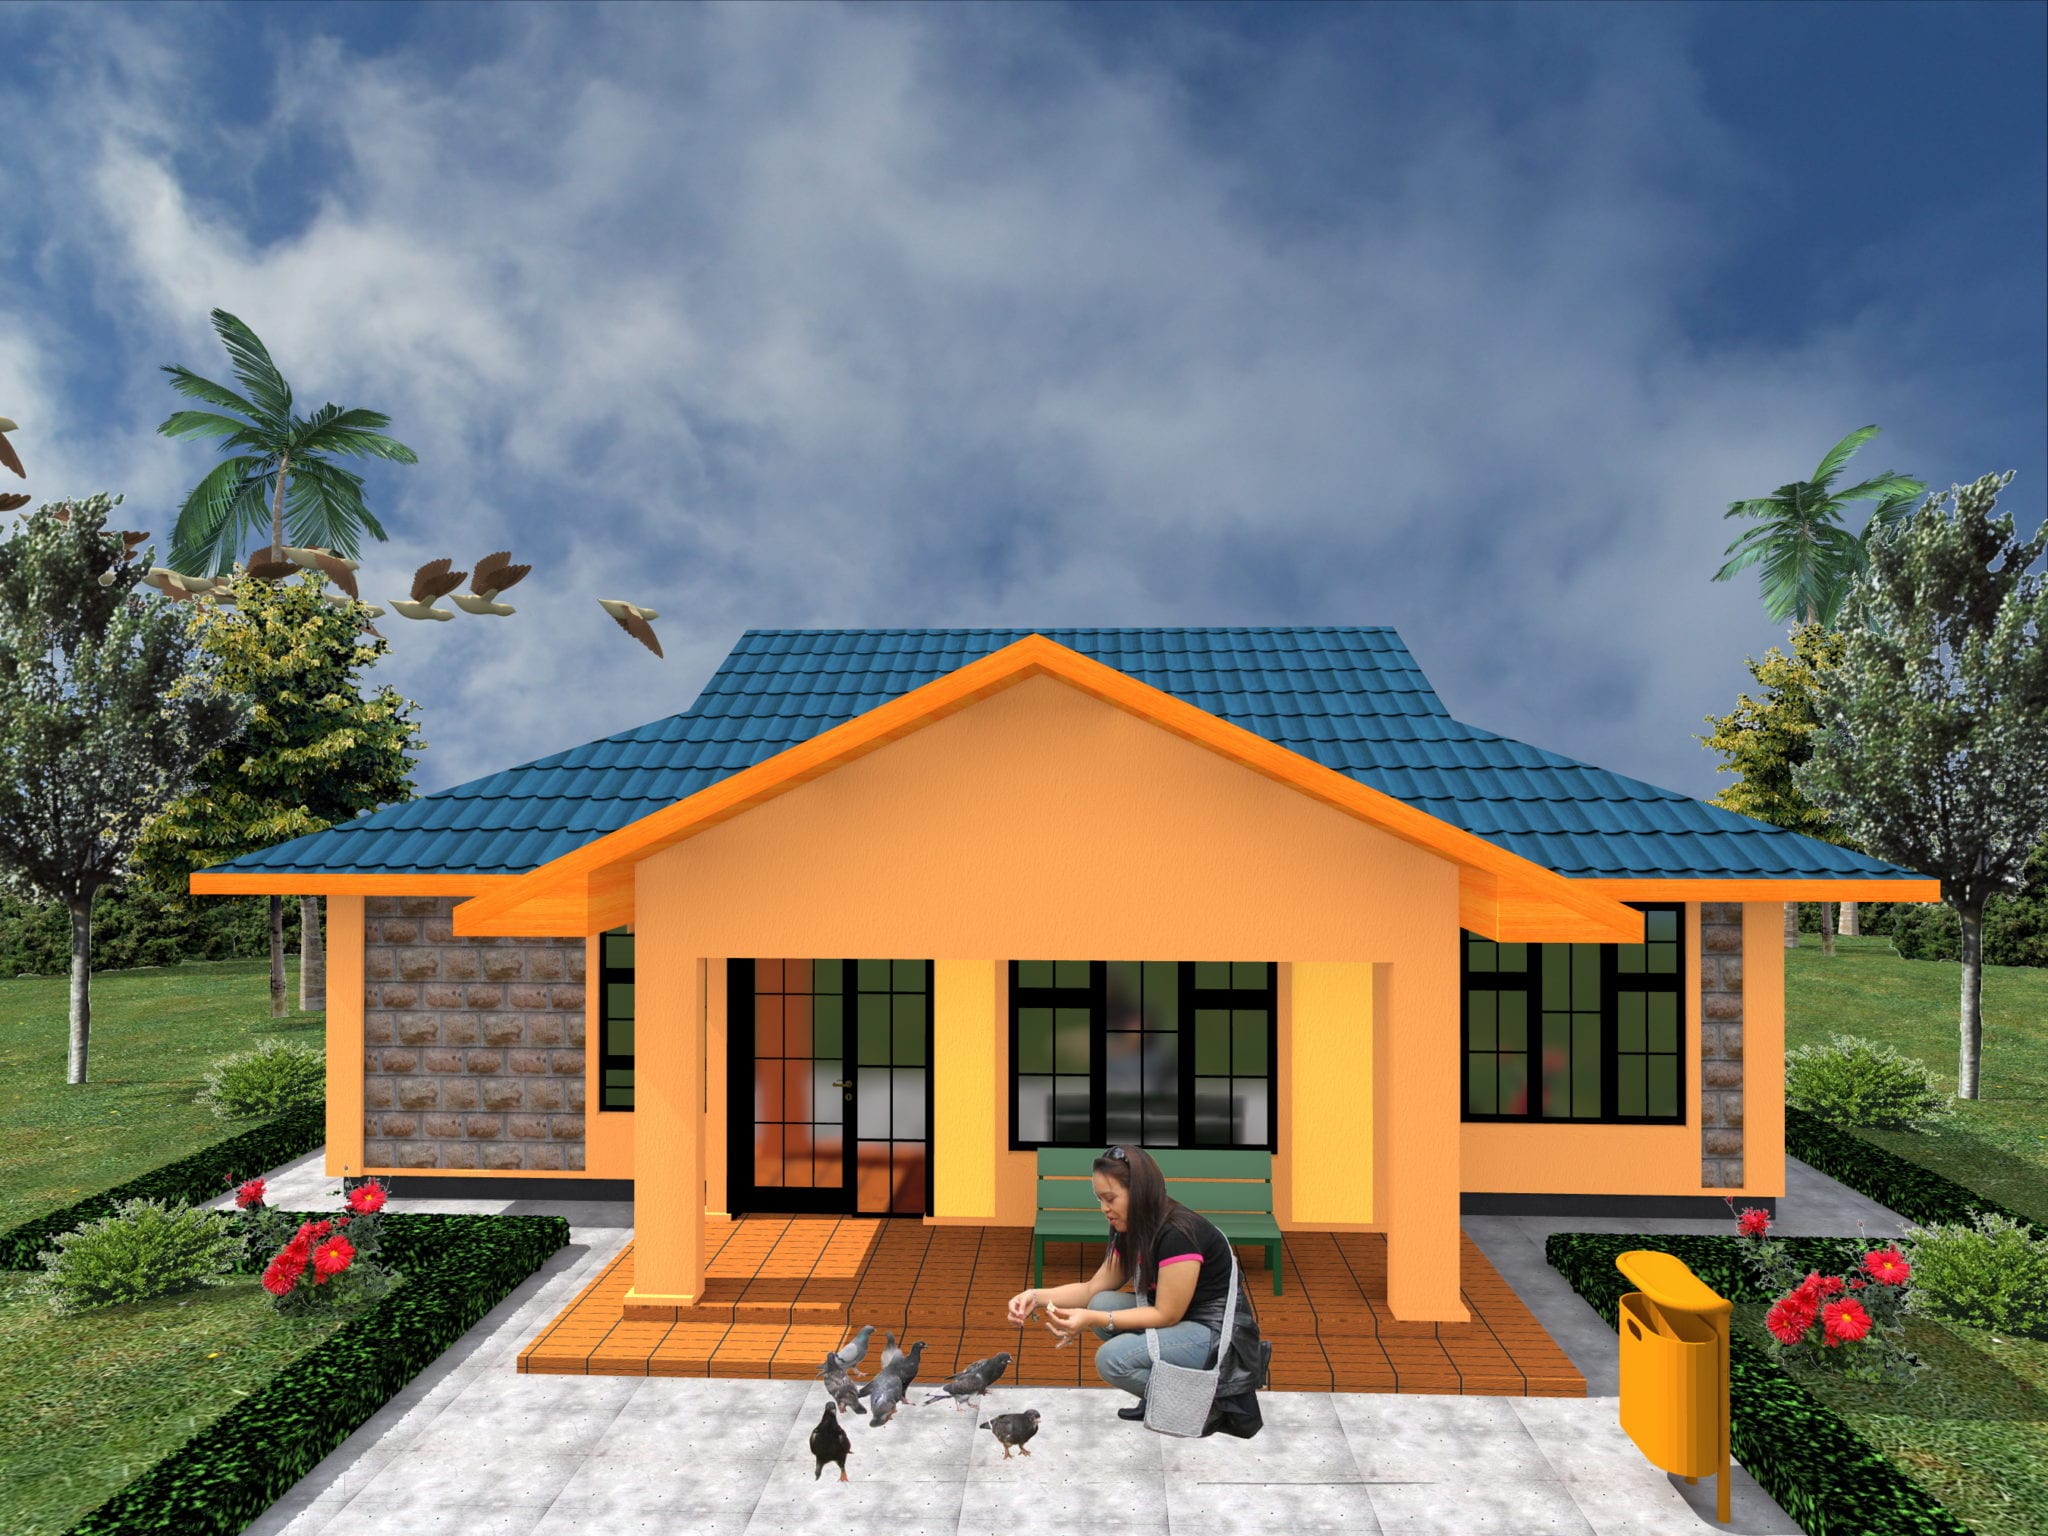 3 Bedroom House Designs in Kenya | HPD Consult